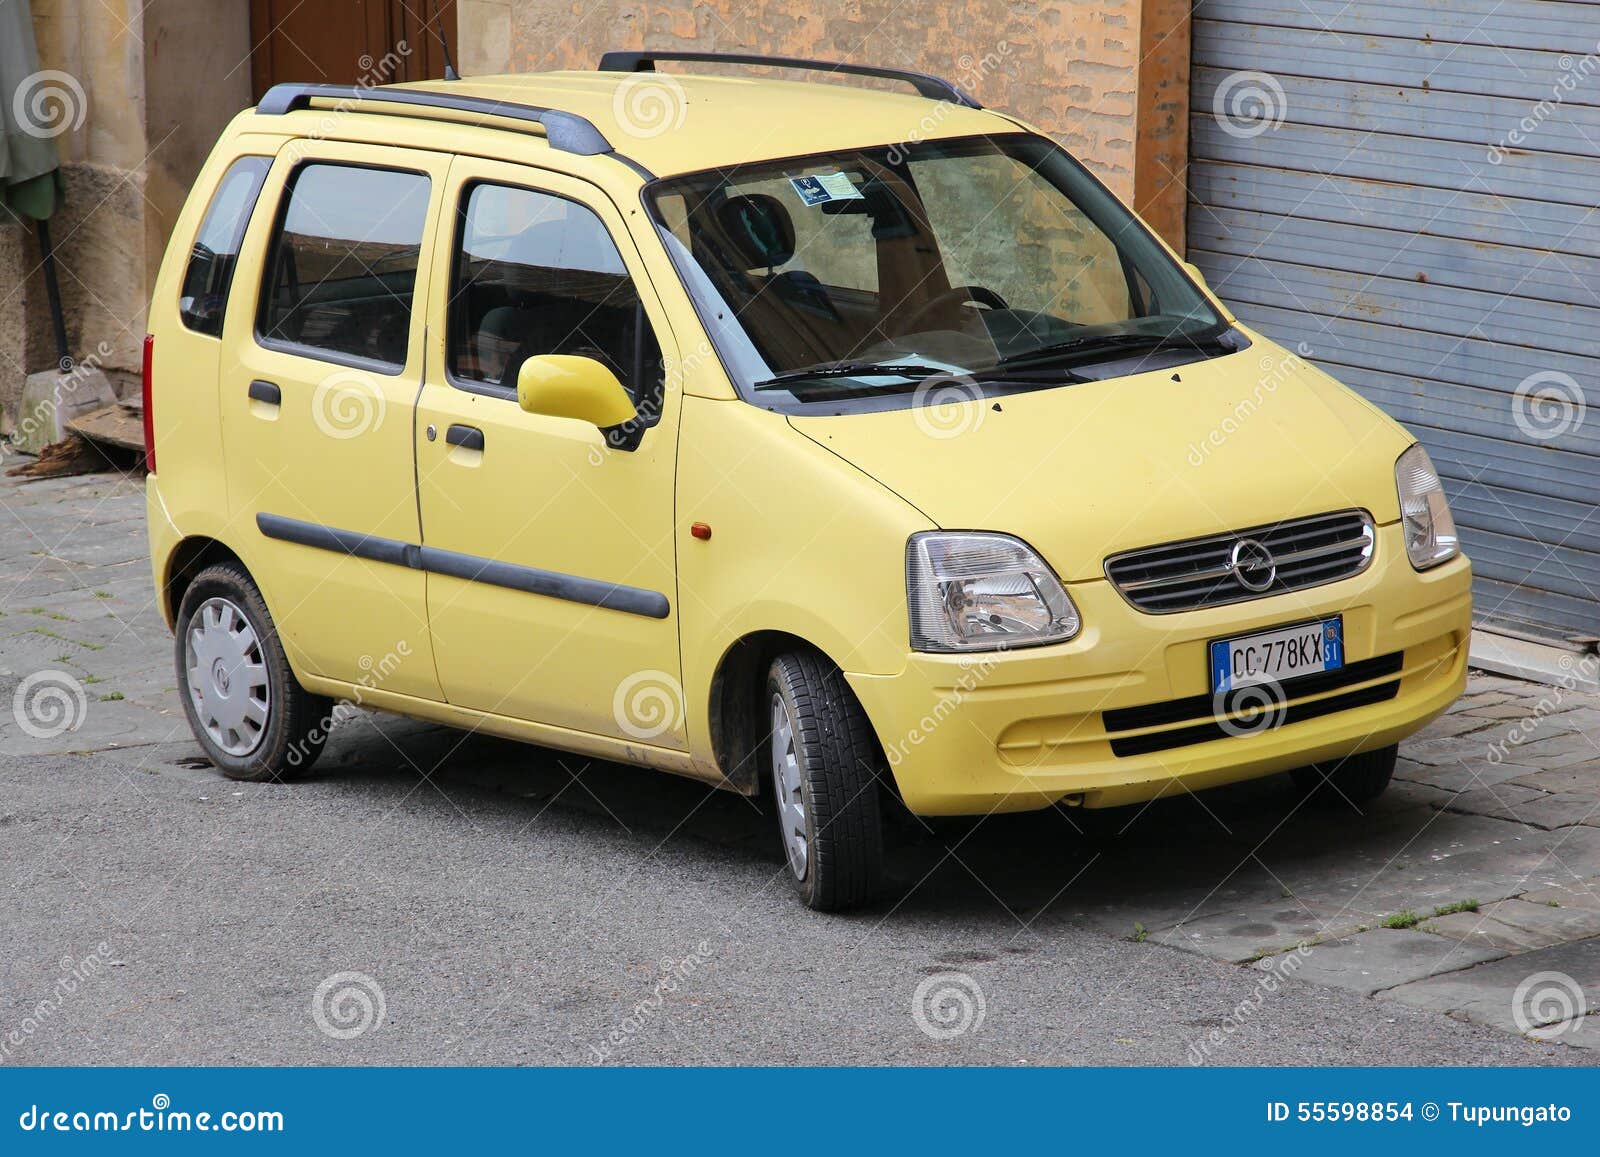 Opel Agila editorial stock image. Image of yellow, transport